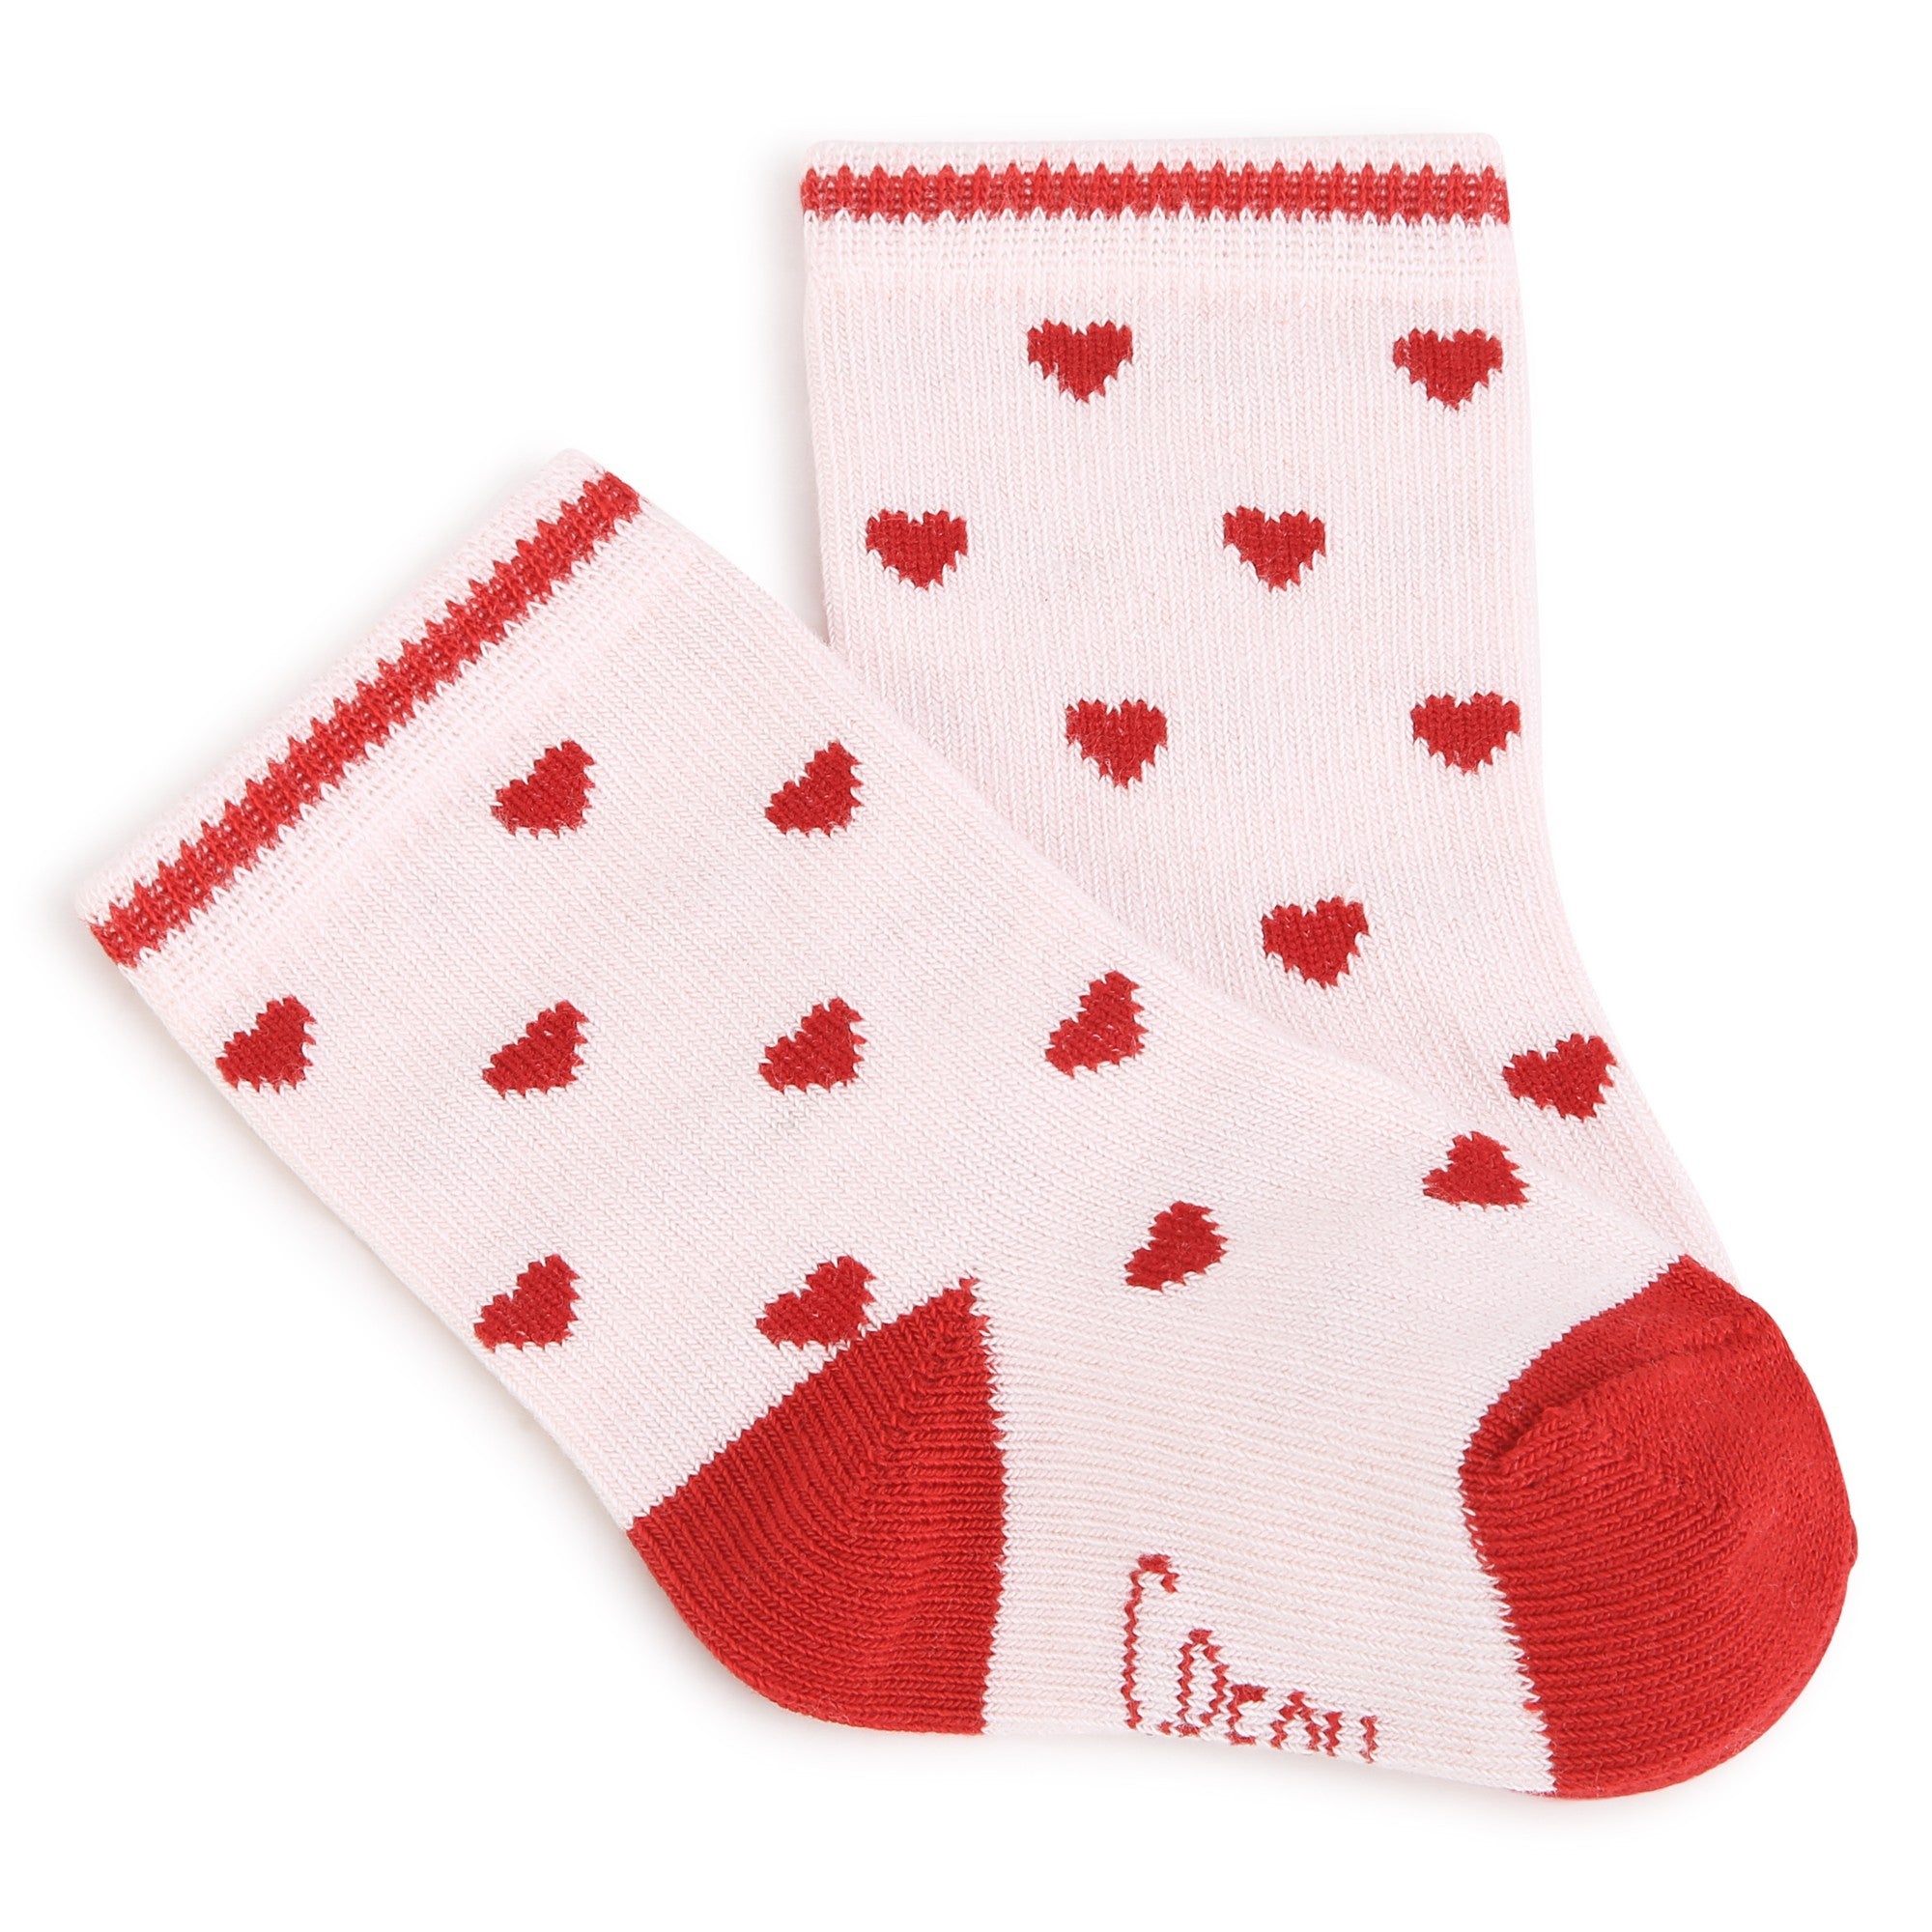 Carrement Beau - Set of 2 pairs of socks